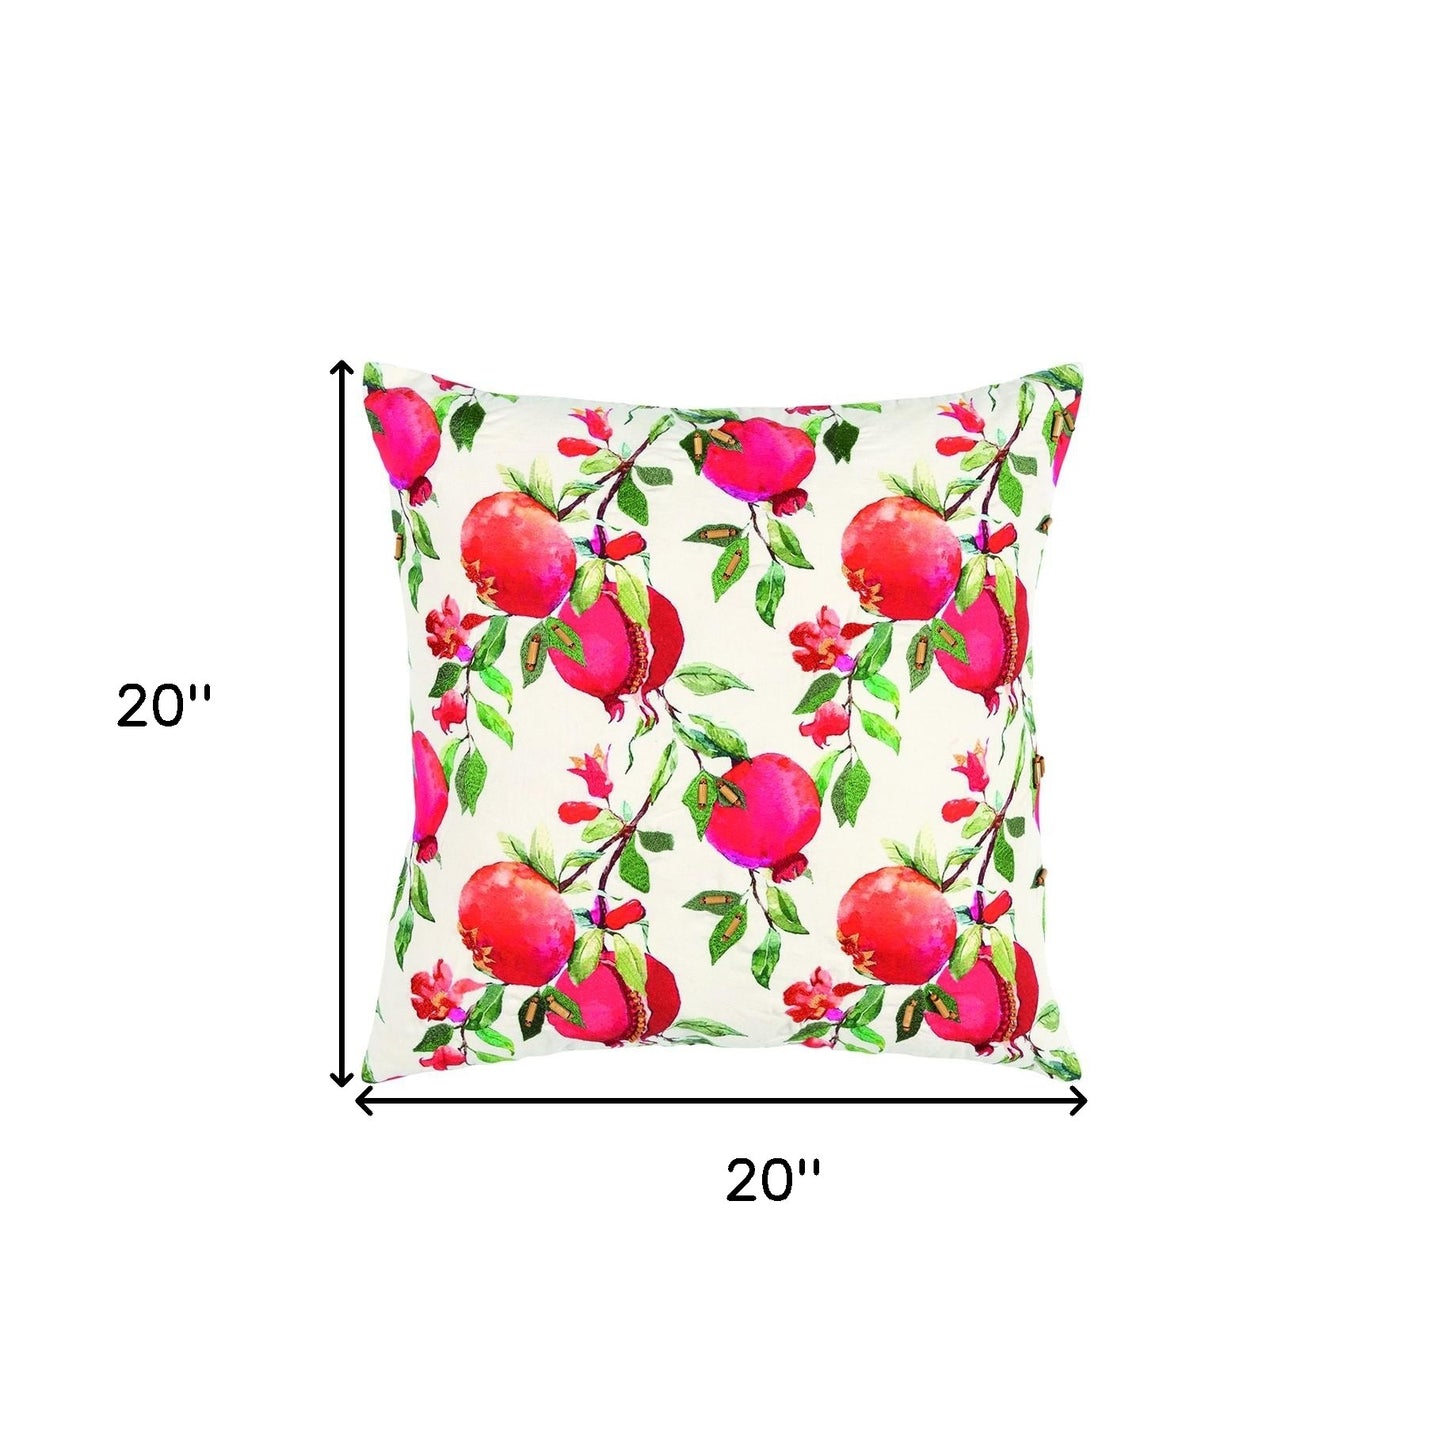 Red White Pomegranates Decorative Throw Pillow